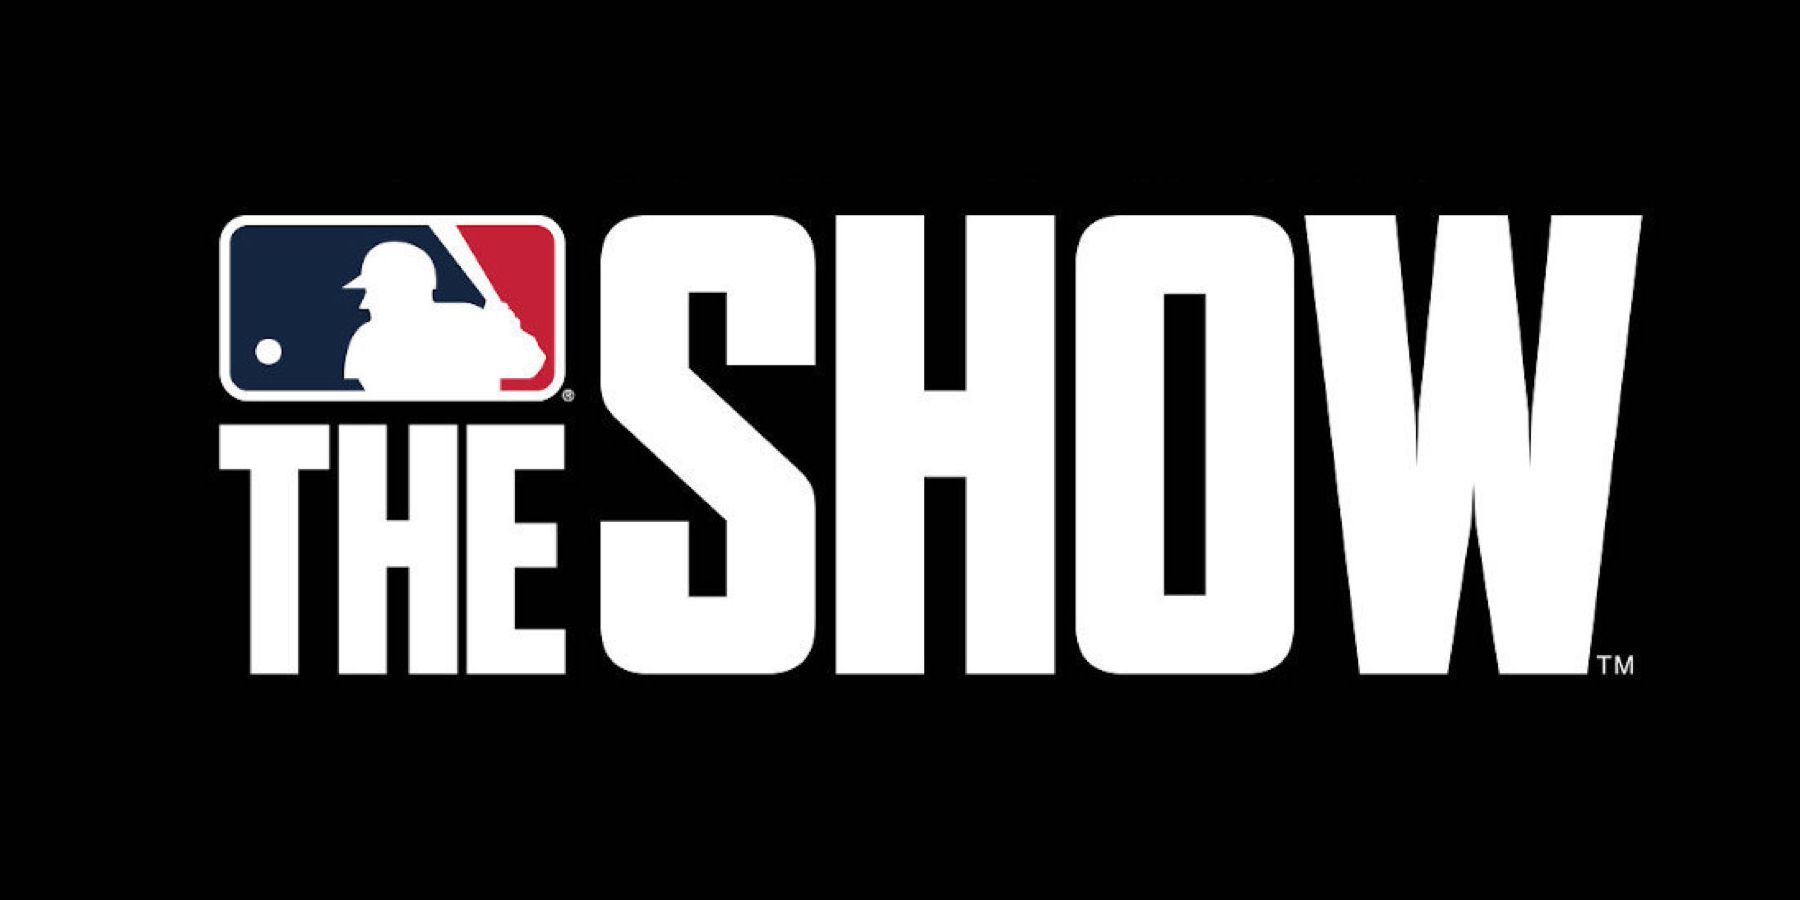 mlb-the-show-logo